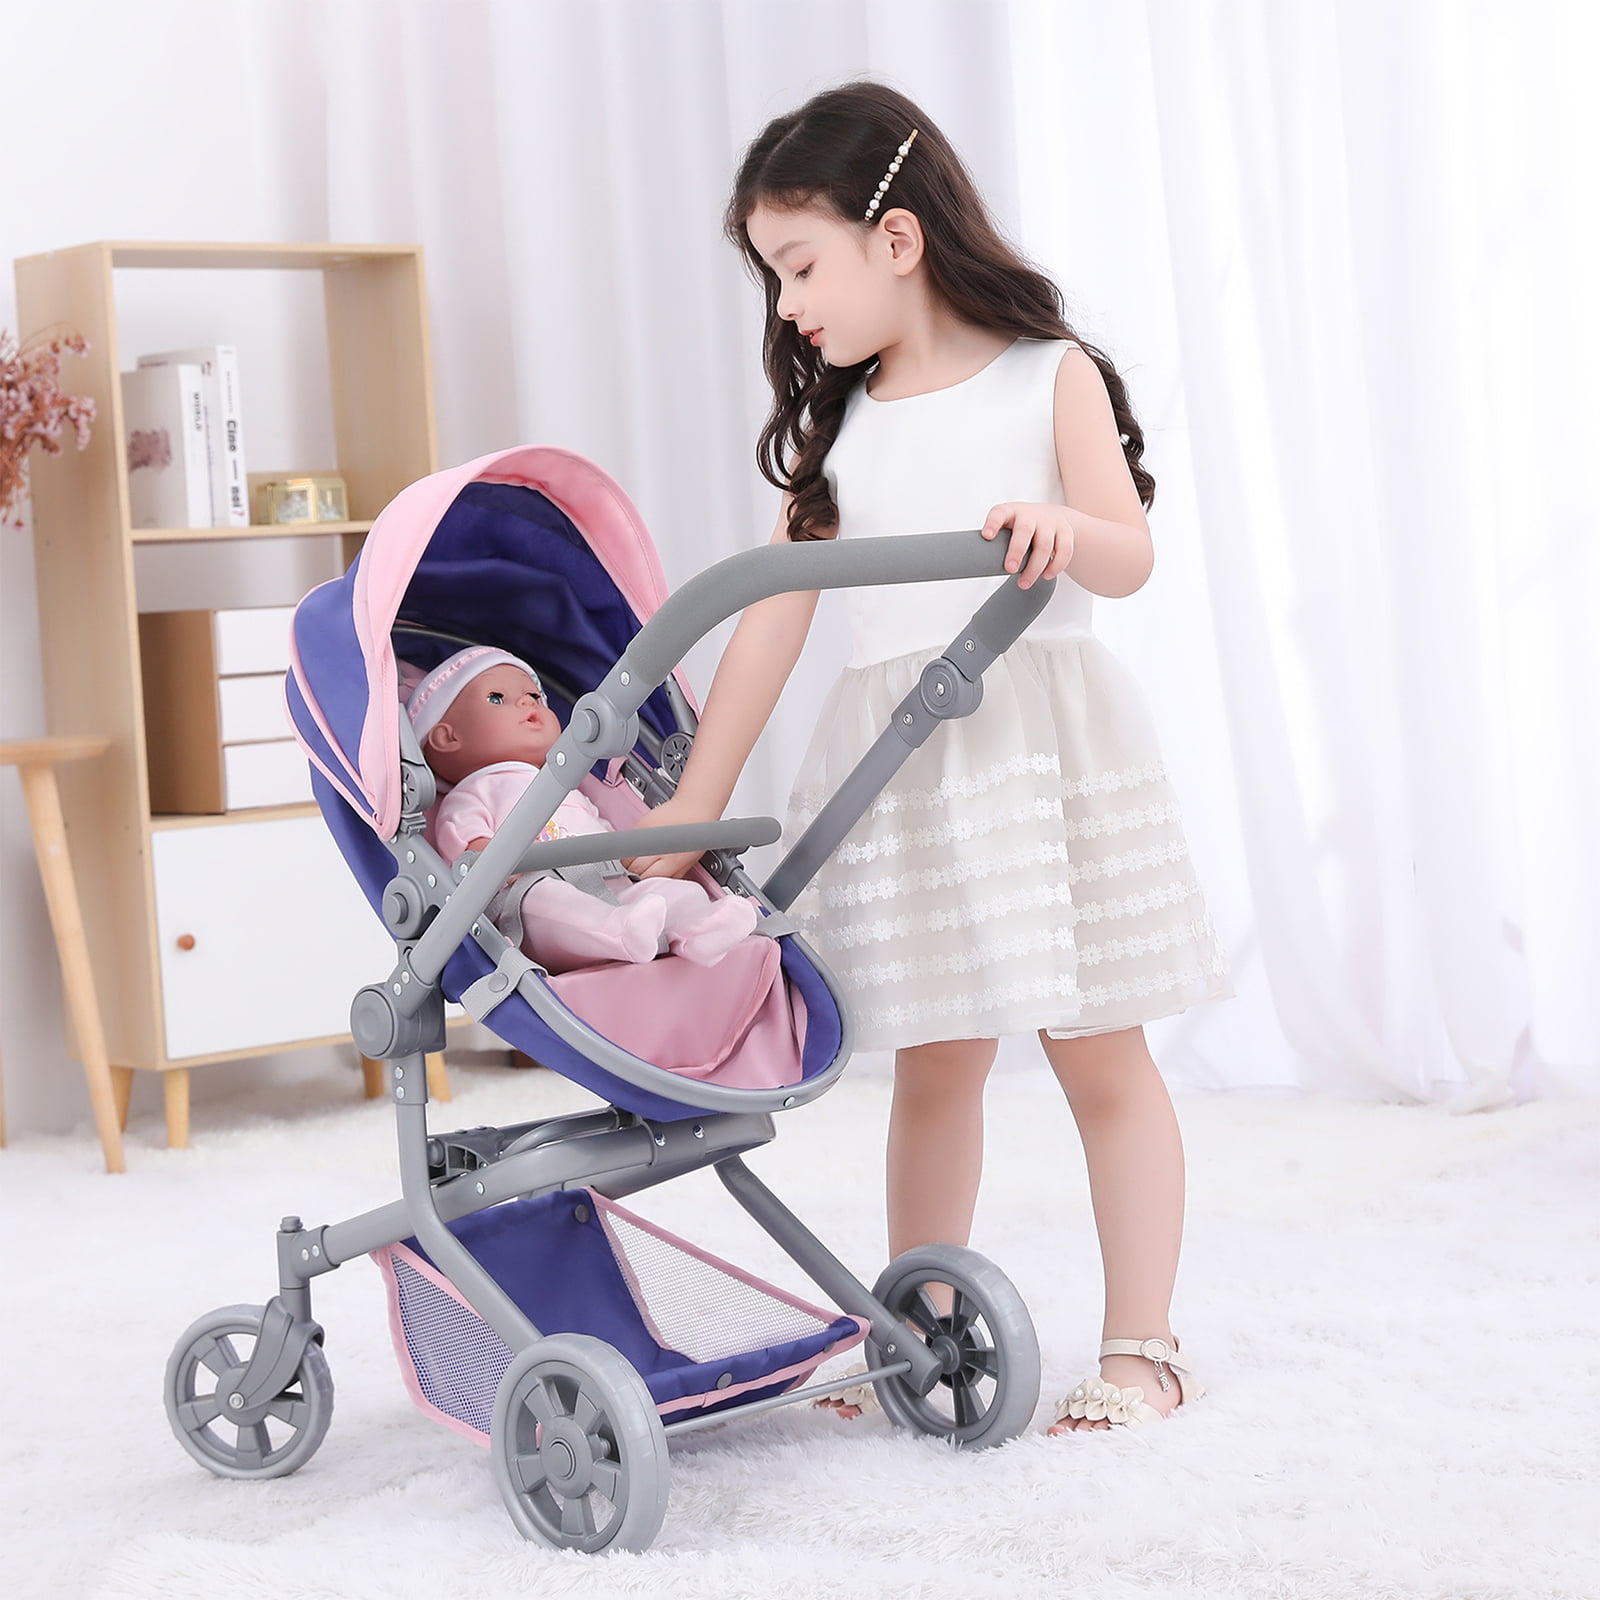 Bayer Design Doll Pram Toy Baby Buggy Girls Kids Stroller Push Toy Purple New 